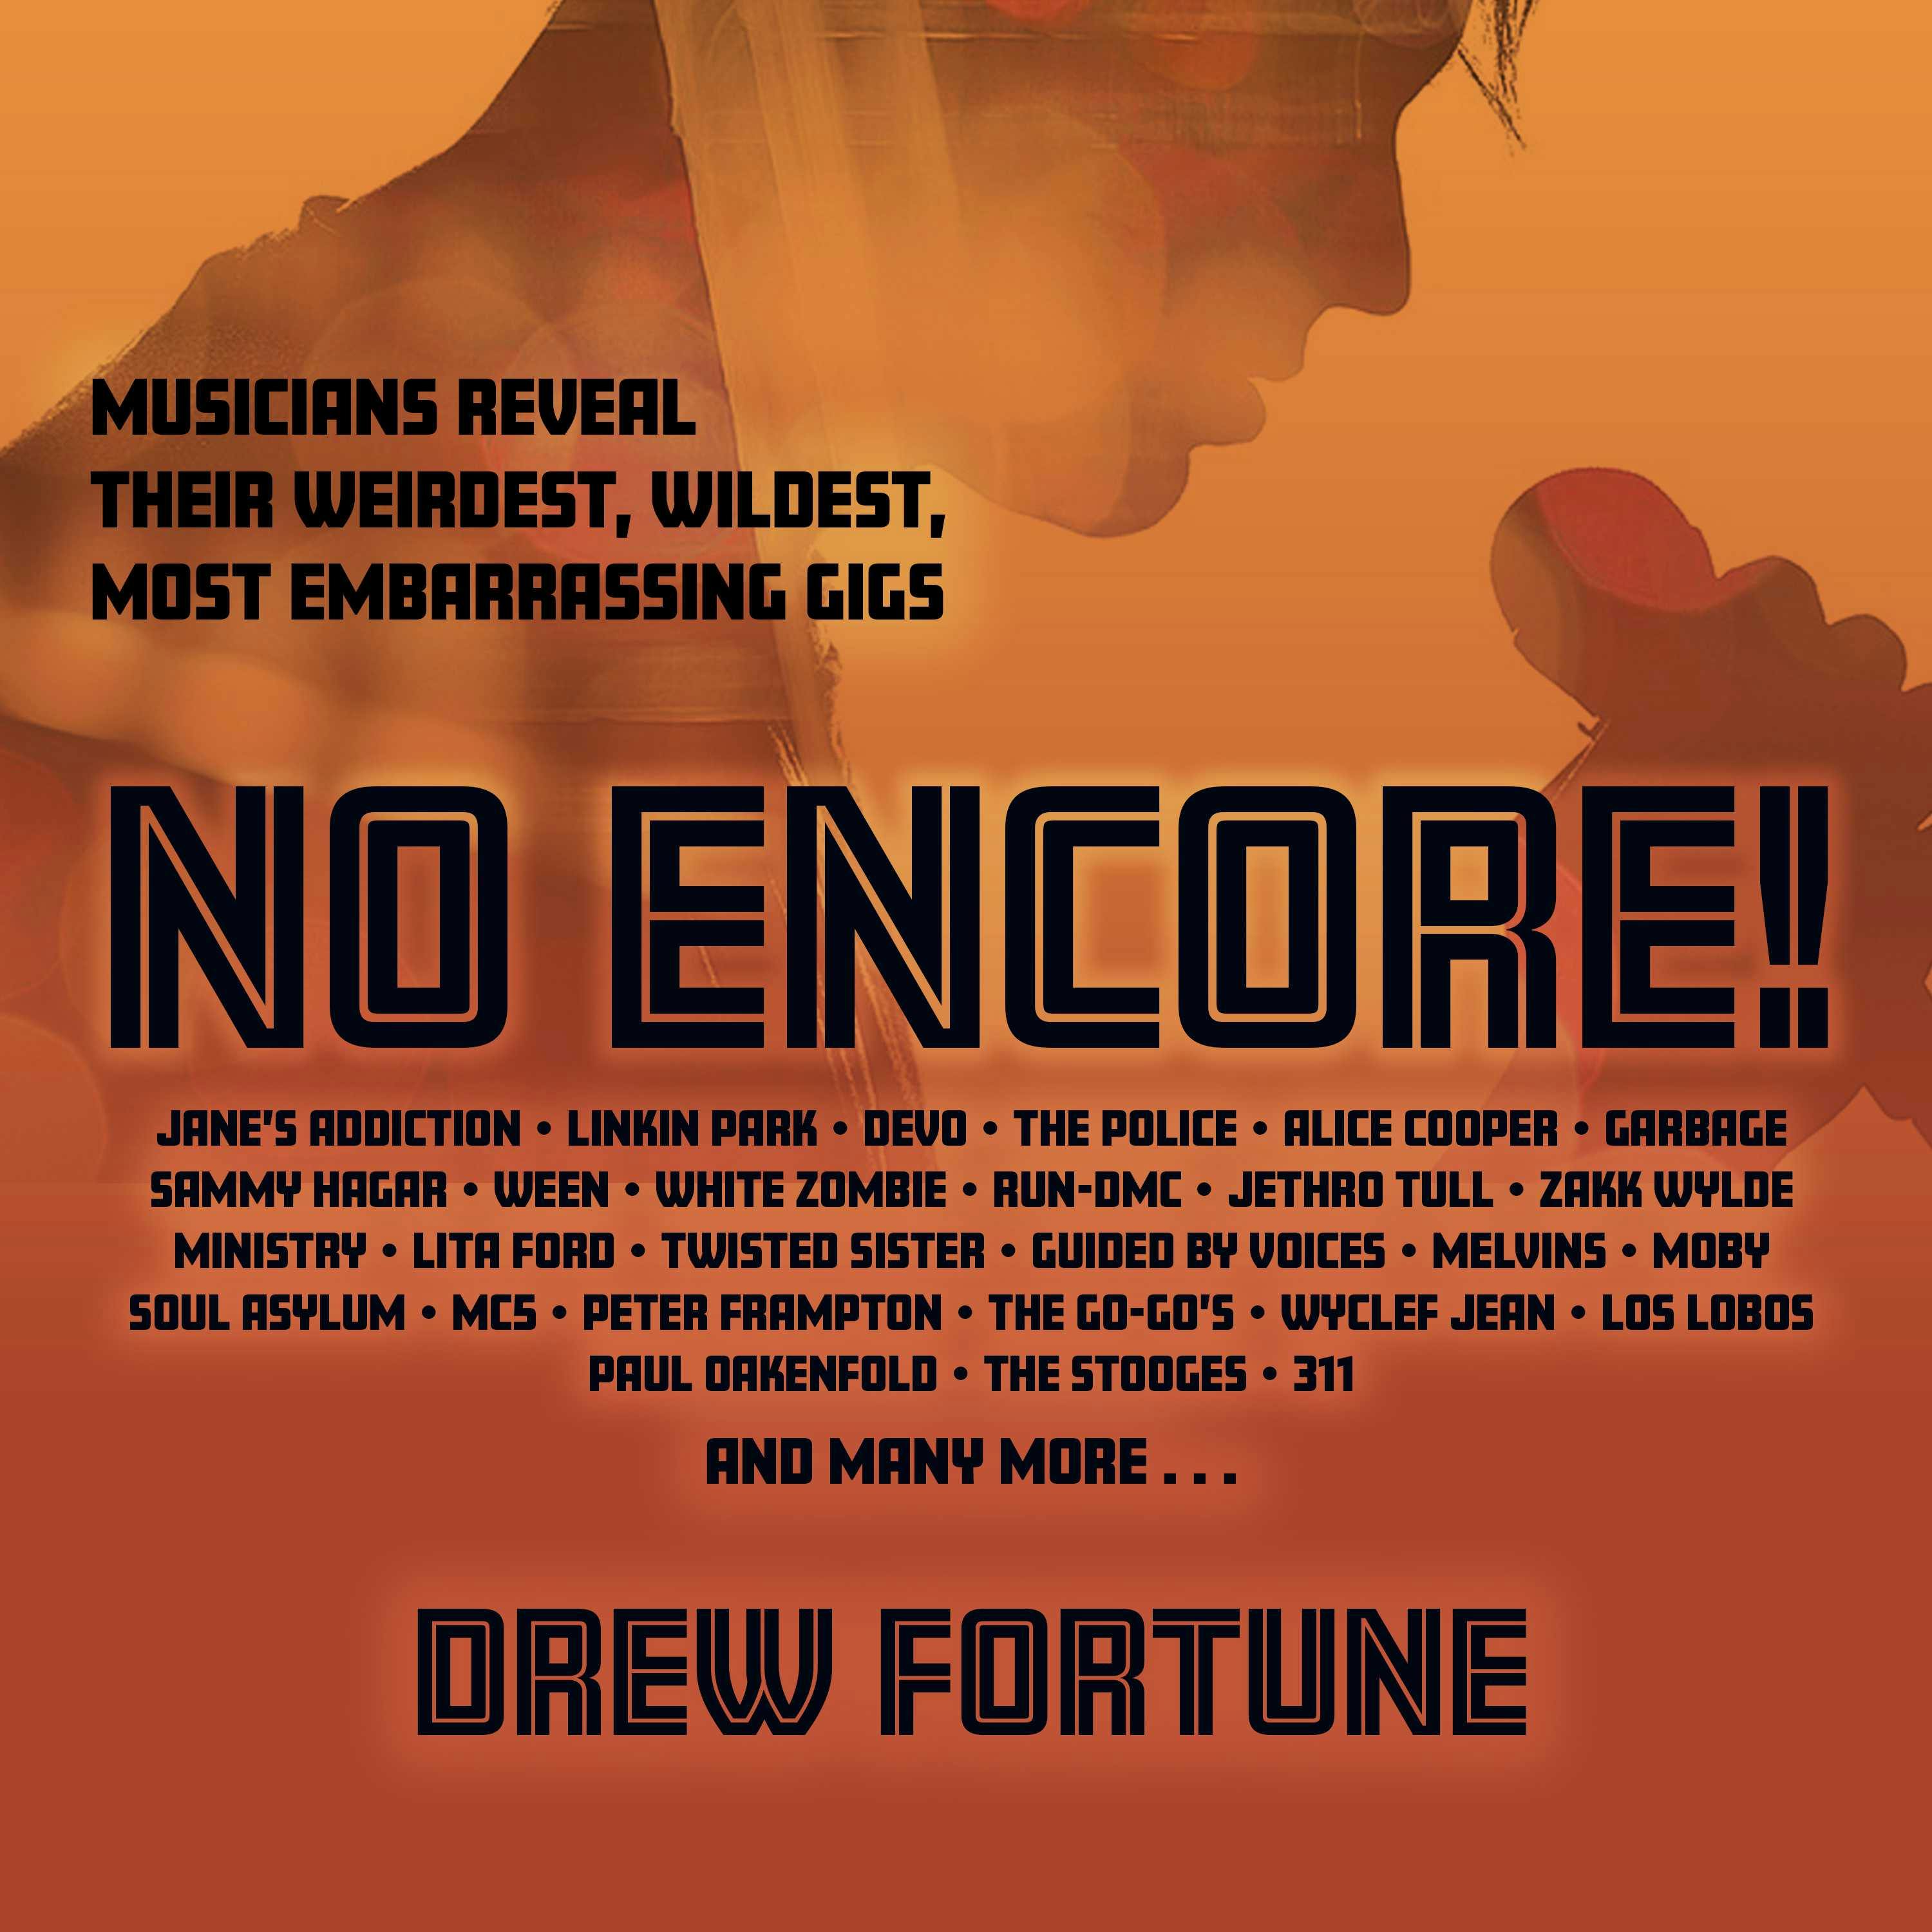 No Encore: Musicians Reveal Their Weirdest, Wildest, Most Embarrassing Gigs - Drew Fortune